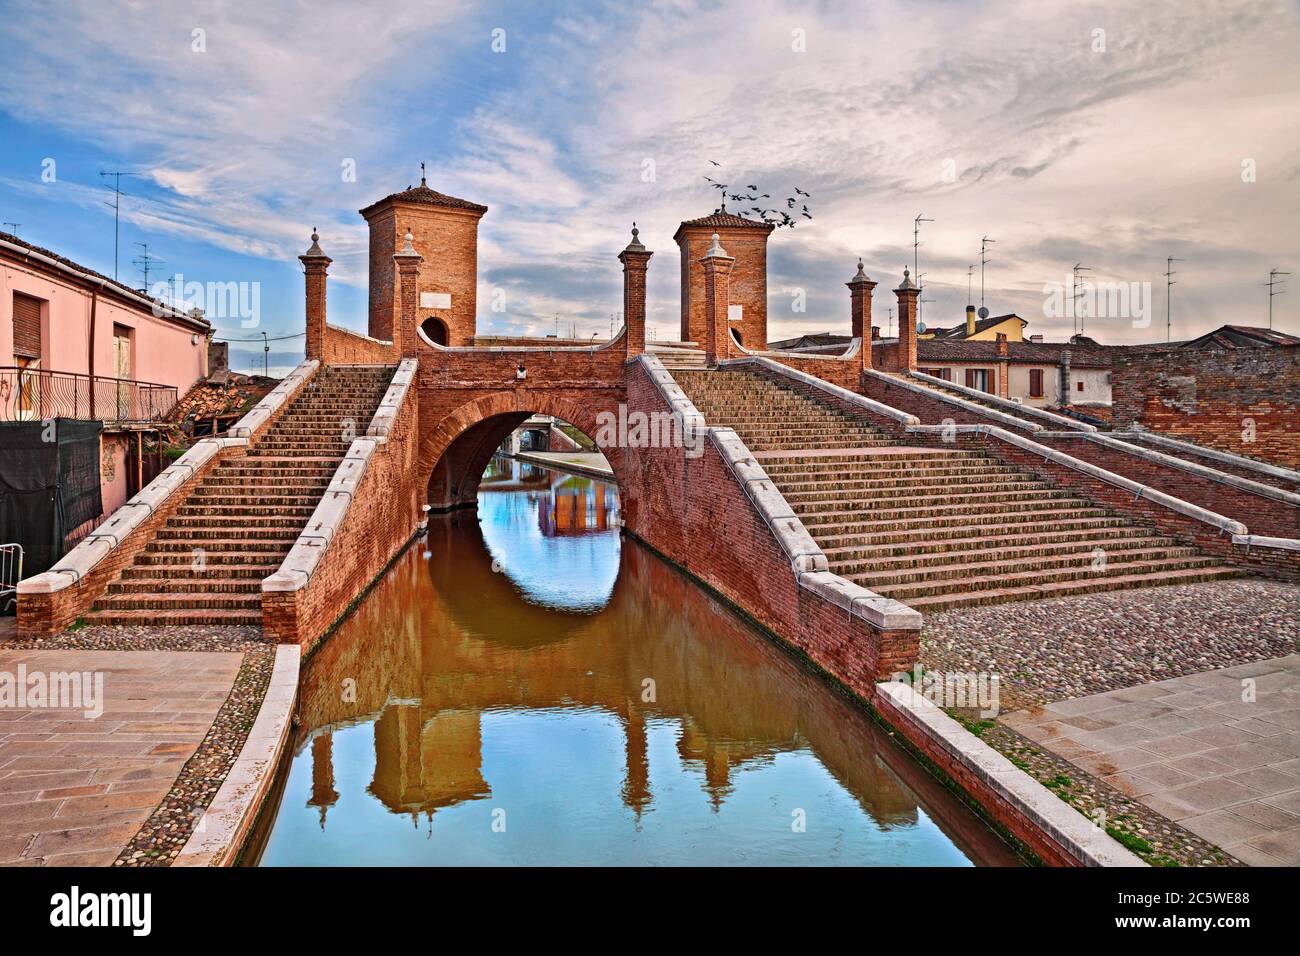 Comacchio, Ferrara, Emilia Romagna, Italy: the ancient bridge Trepponti, a famous five-way bridge in the old town known as the Little Venice Stock Photo